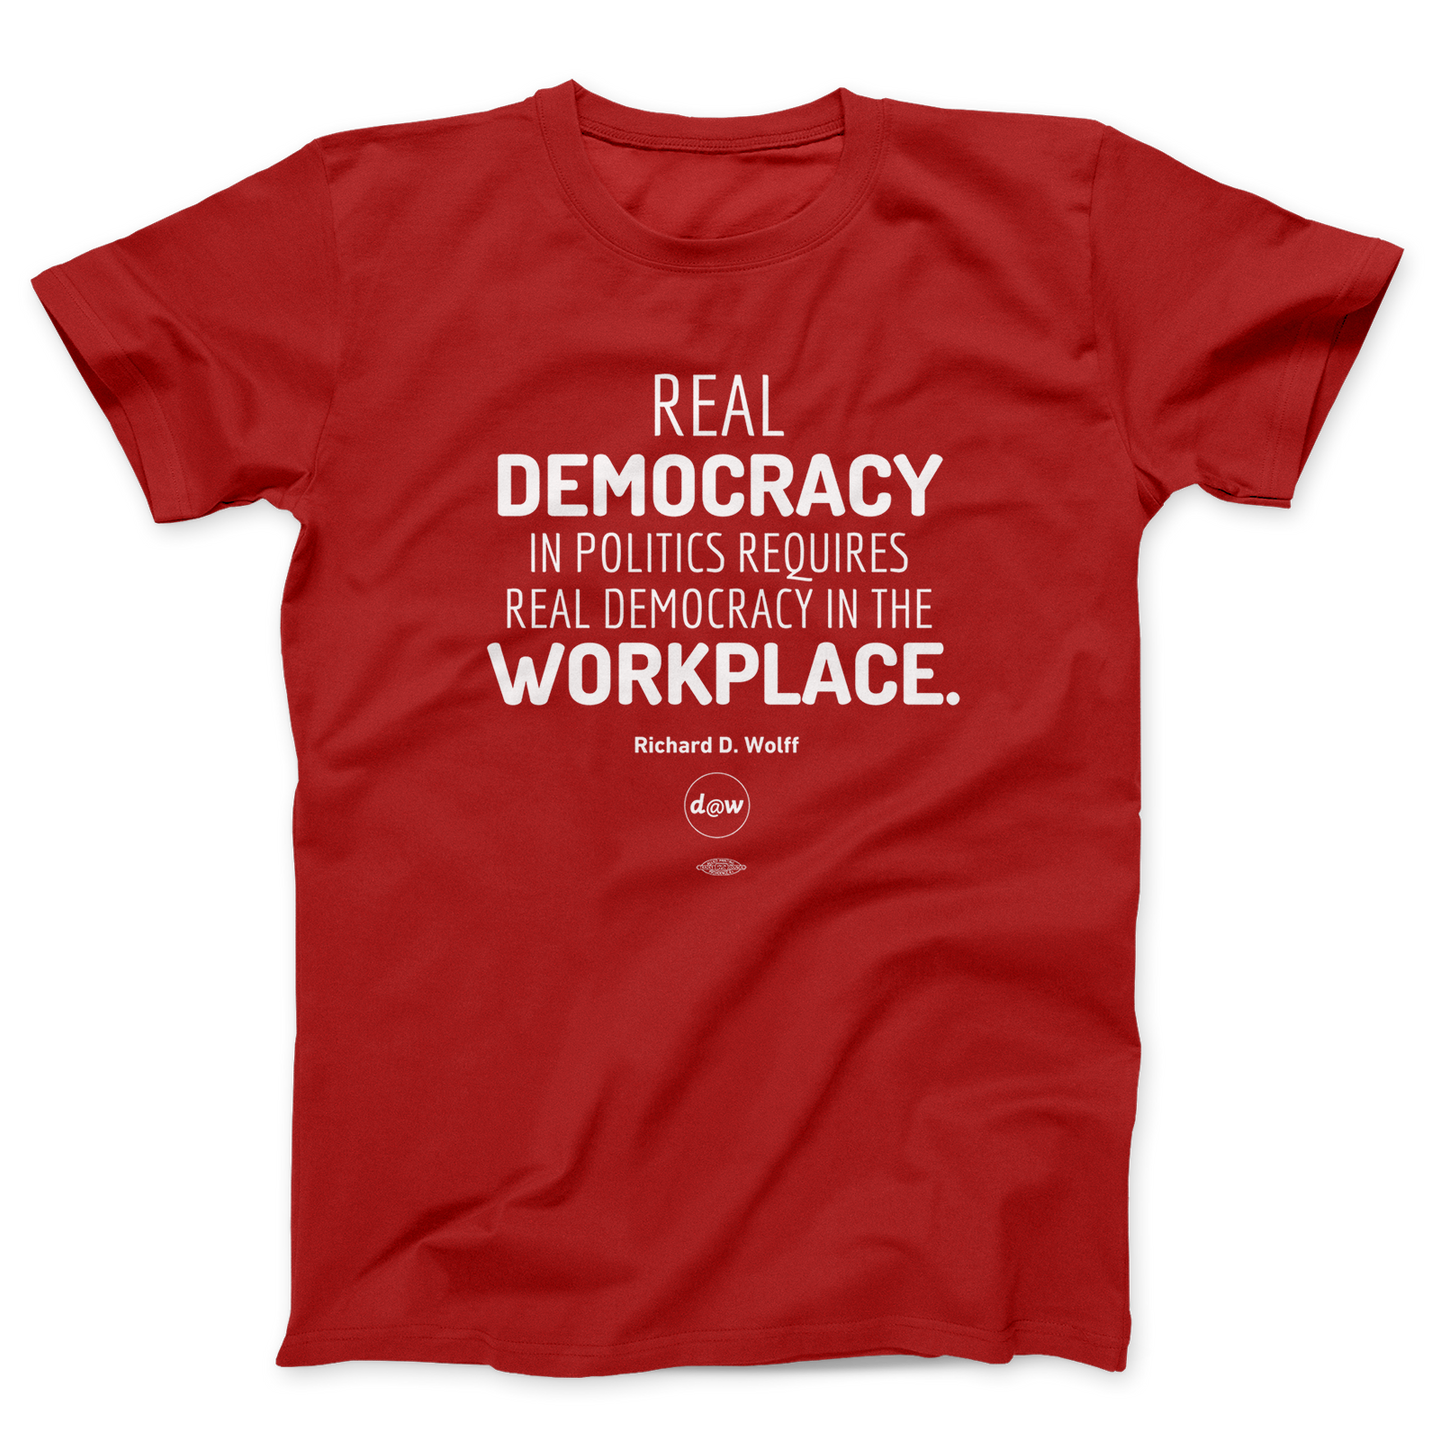 Richard Wolff Quote T-Shirt